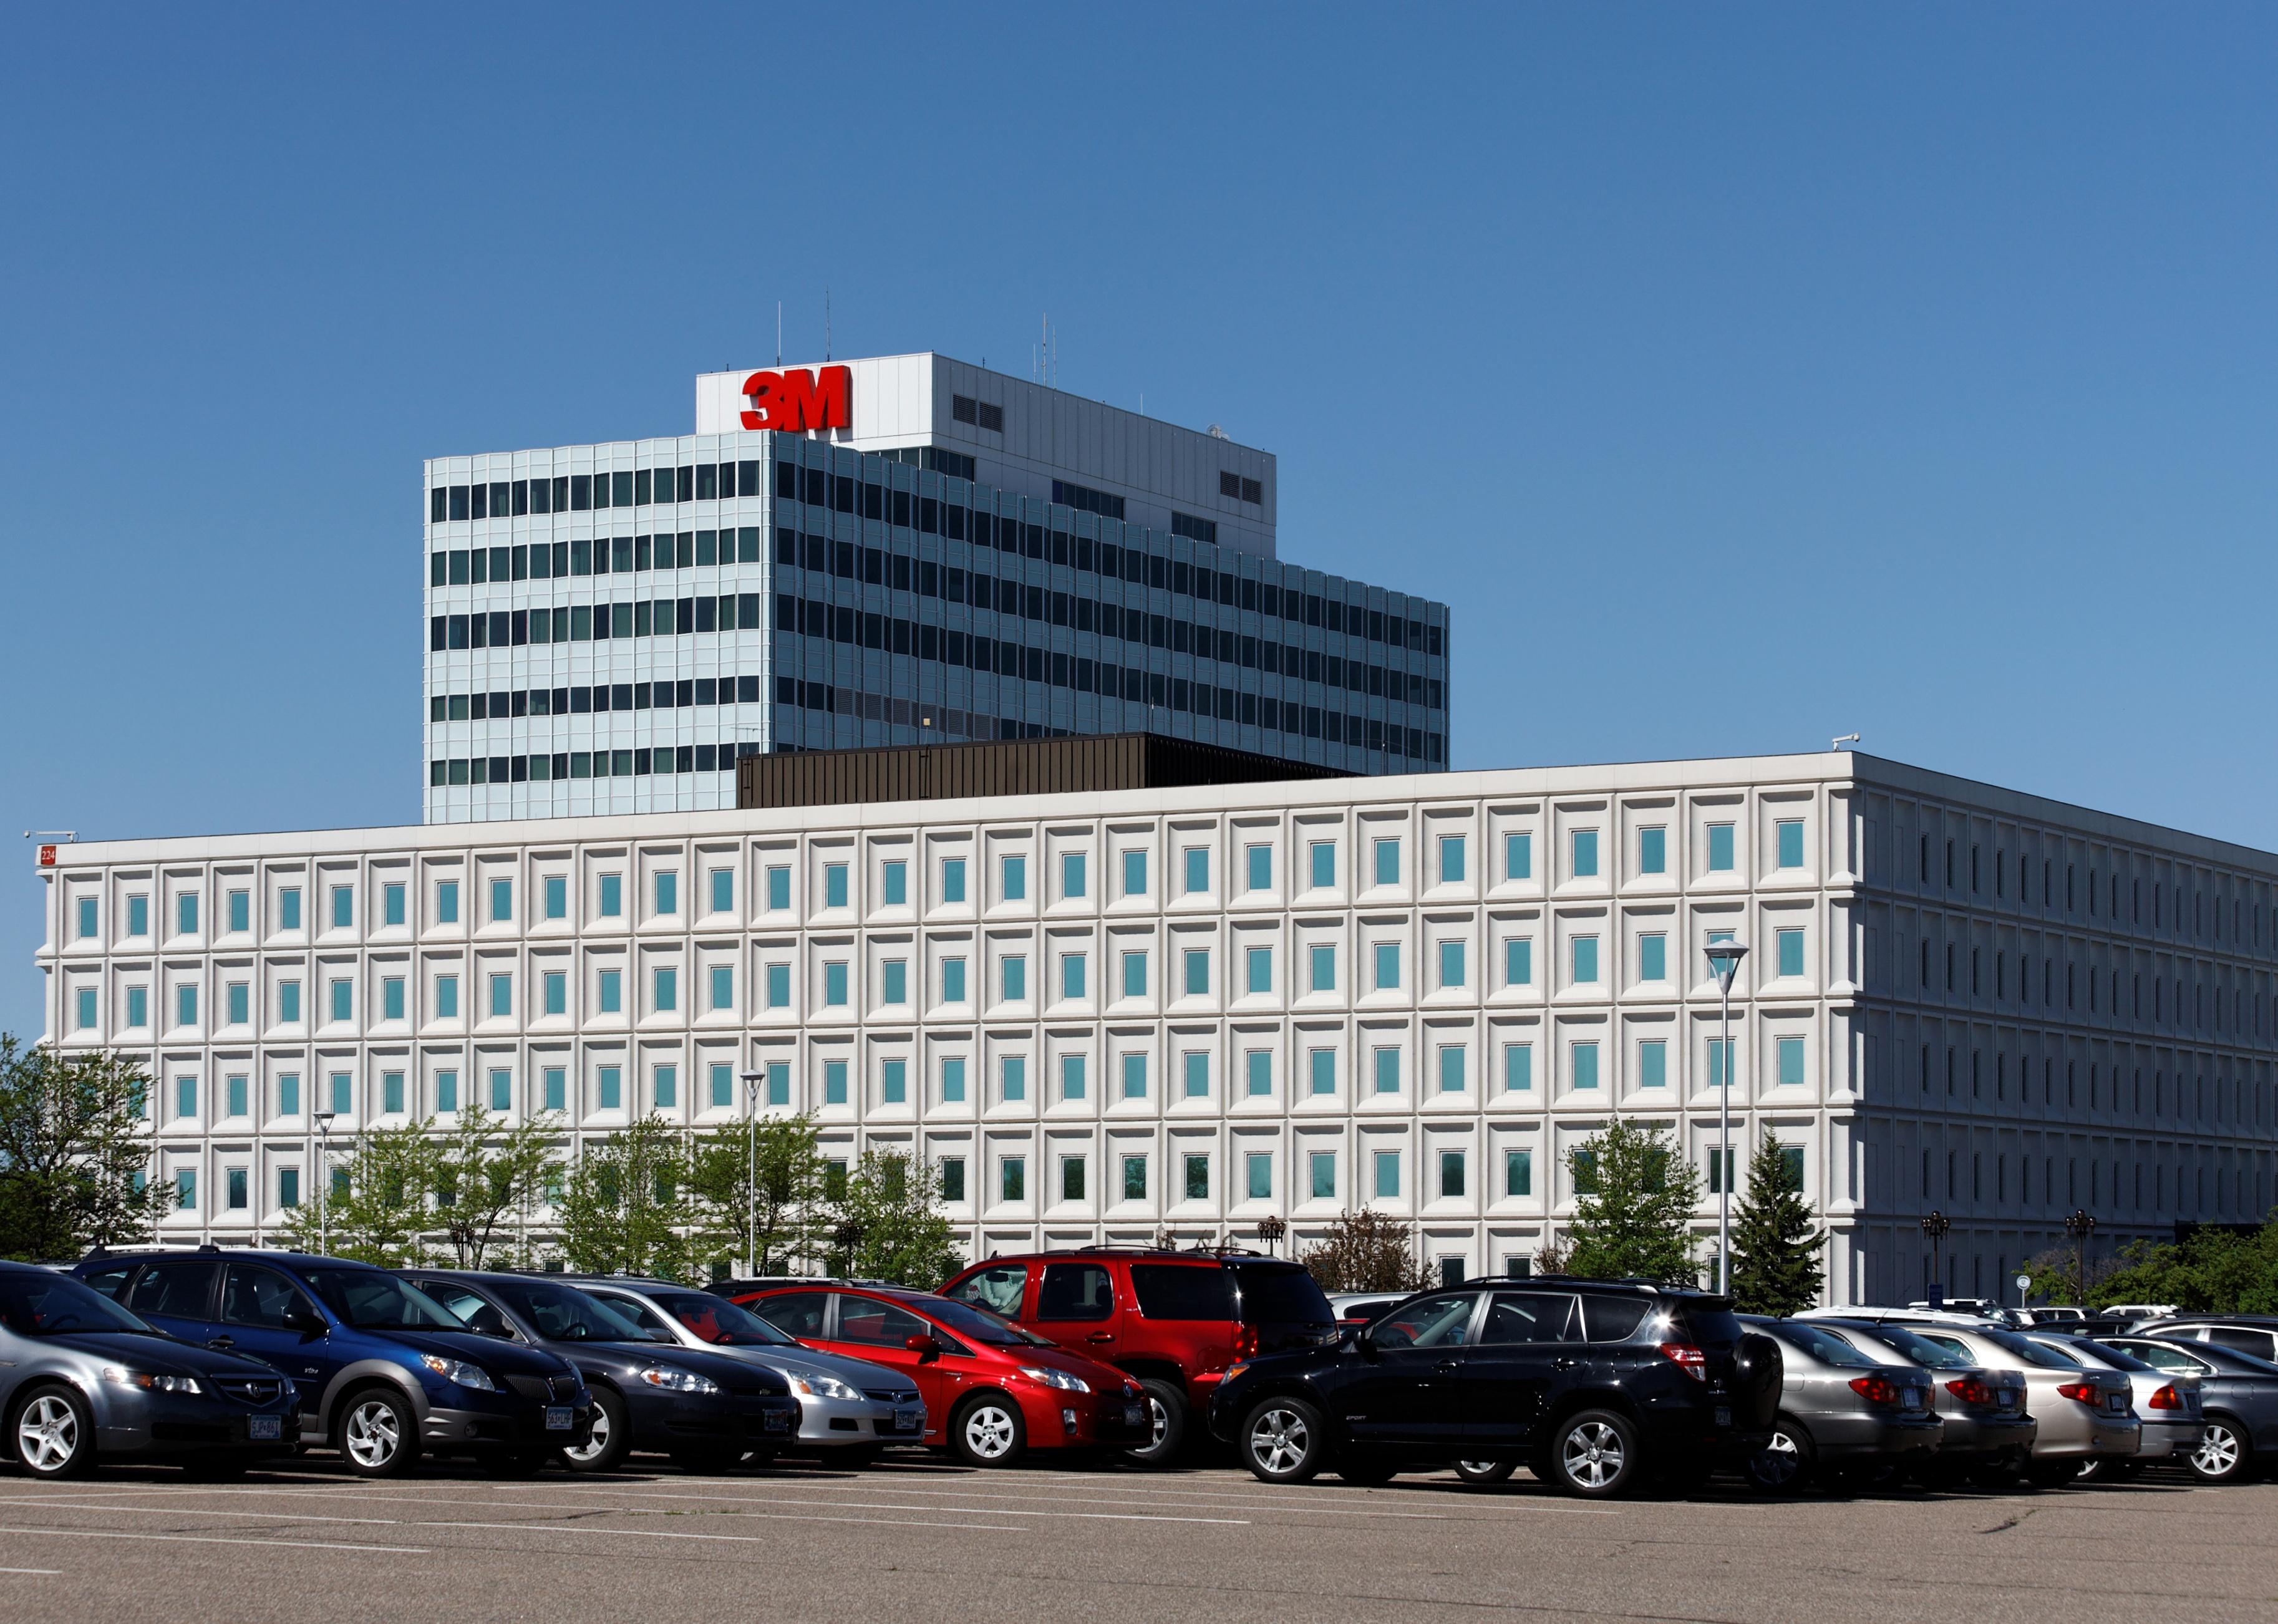 The 3M World Headquarters complex.